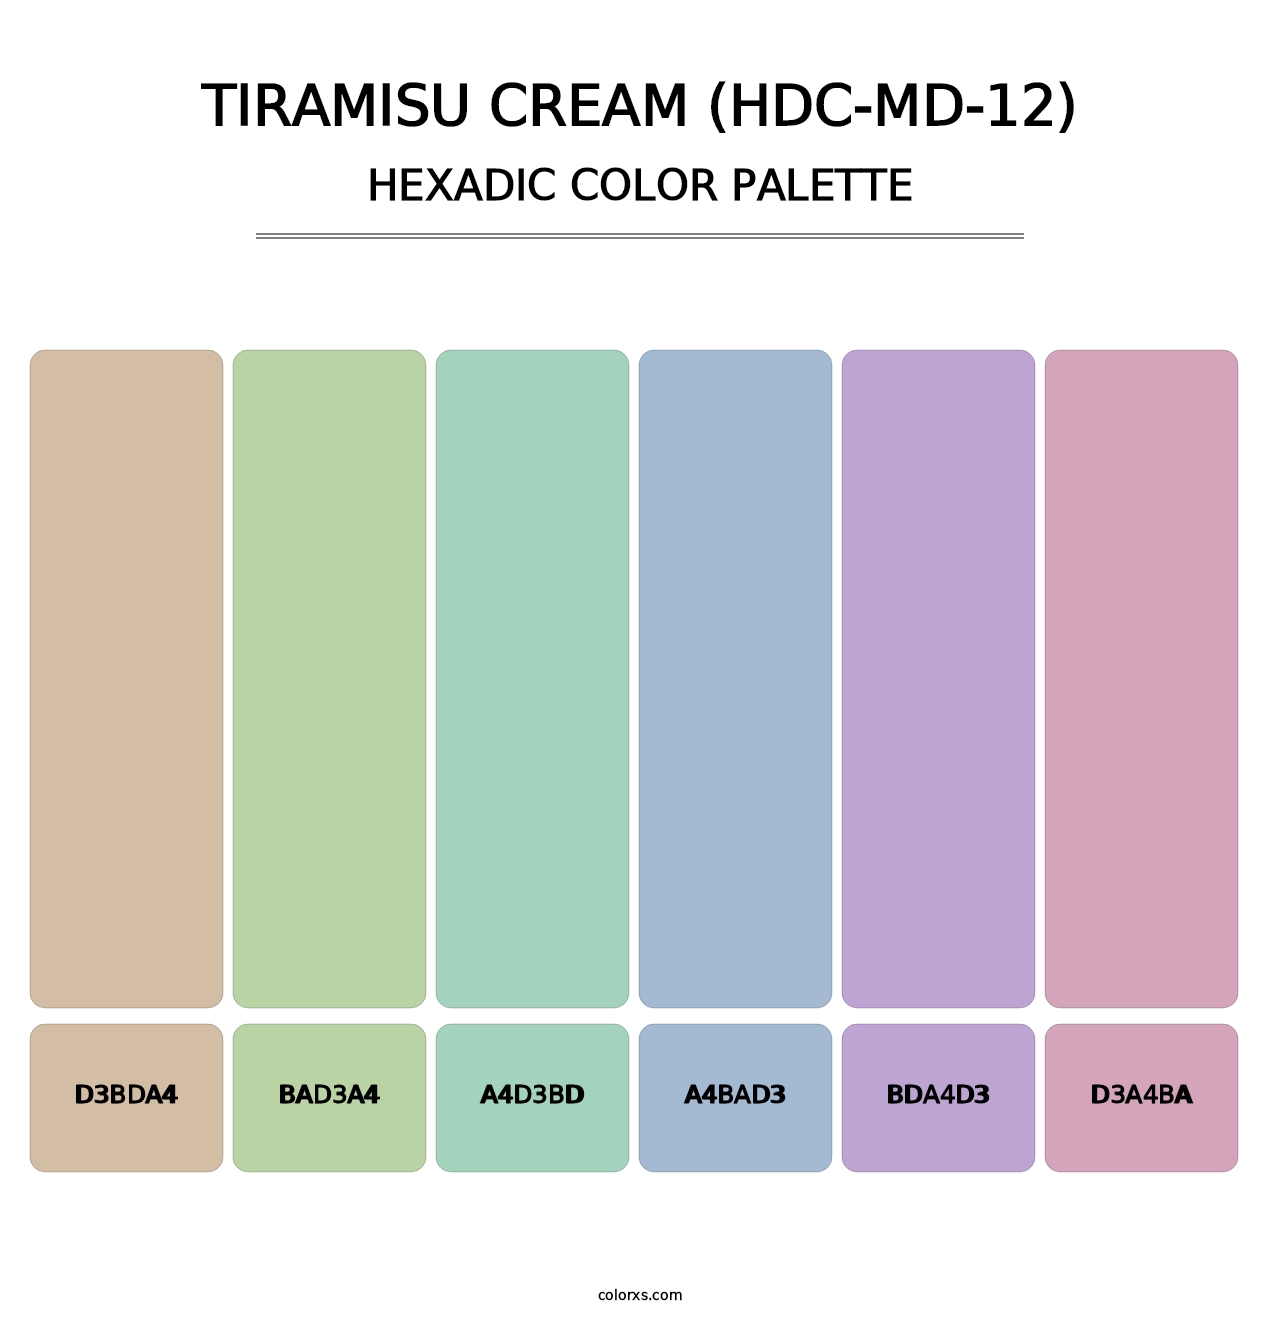 Tiramisu Cream (HDC-MD-12) - Hexadic Color Palette